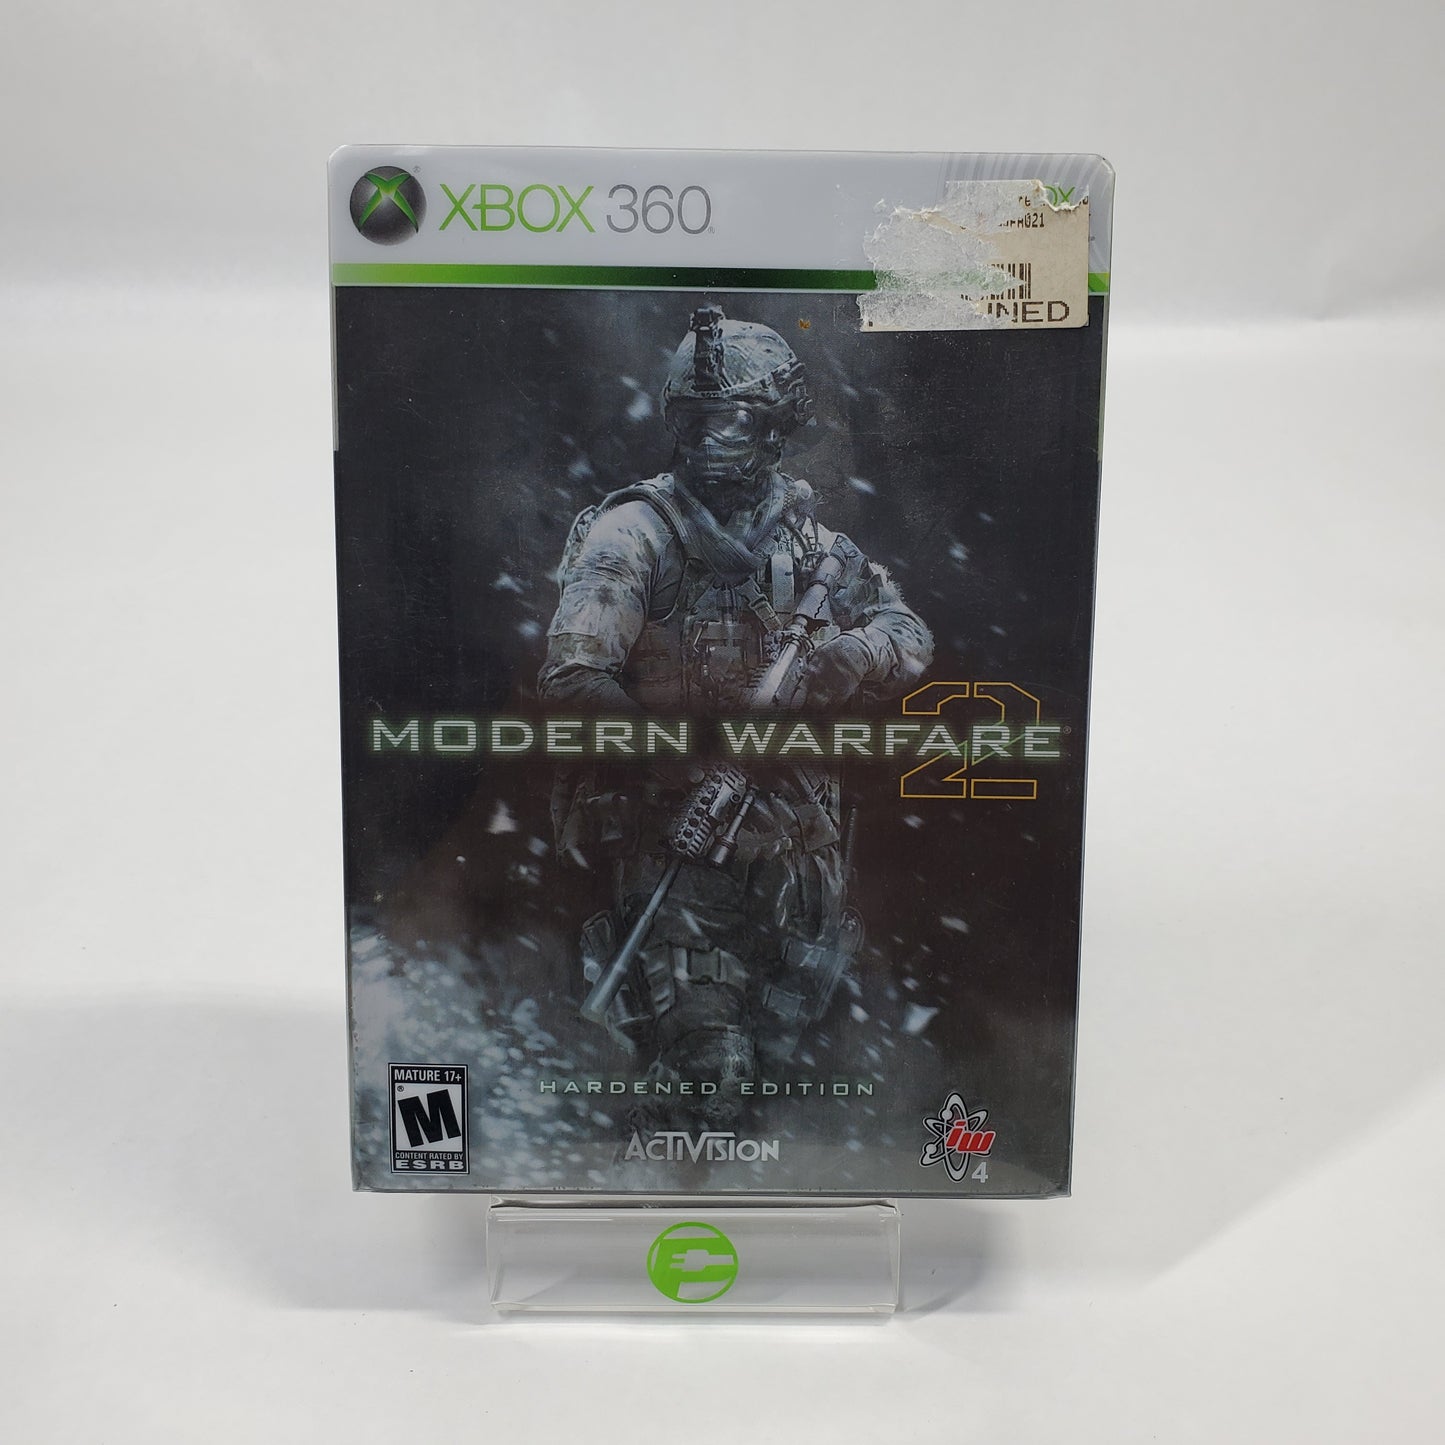 Call of Duty Modern Warfare 2 [Hardened Edition] (Microsoft Xbox 360, 2009)